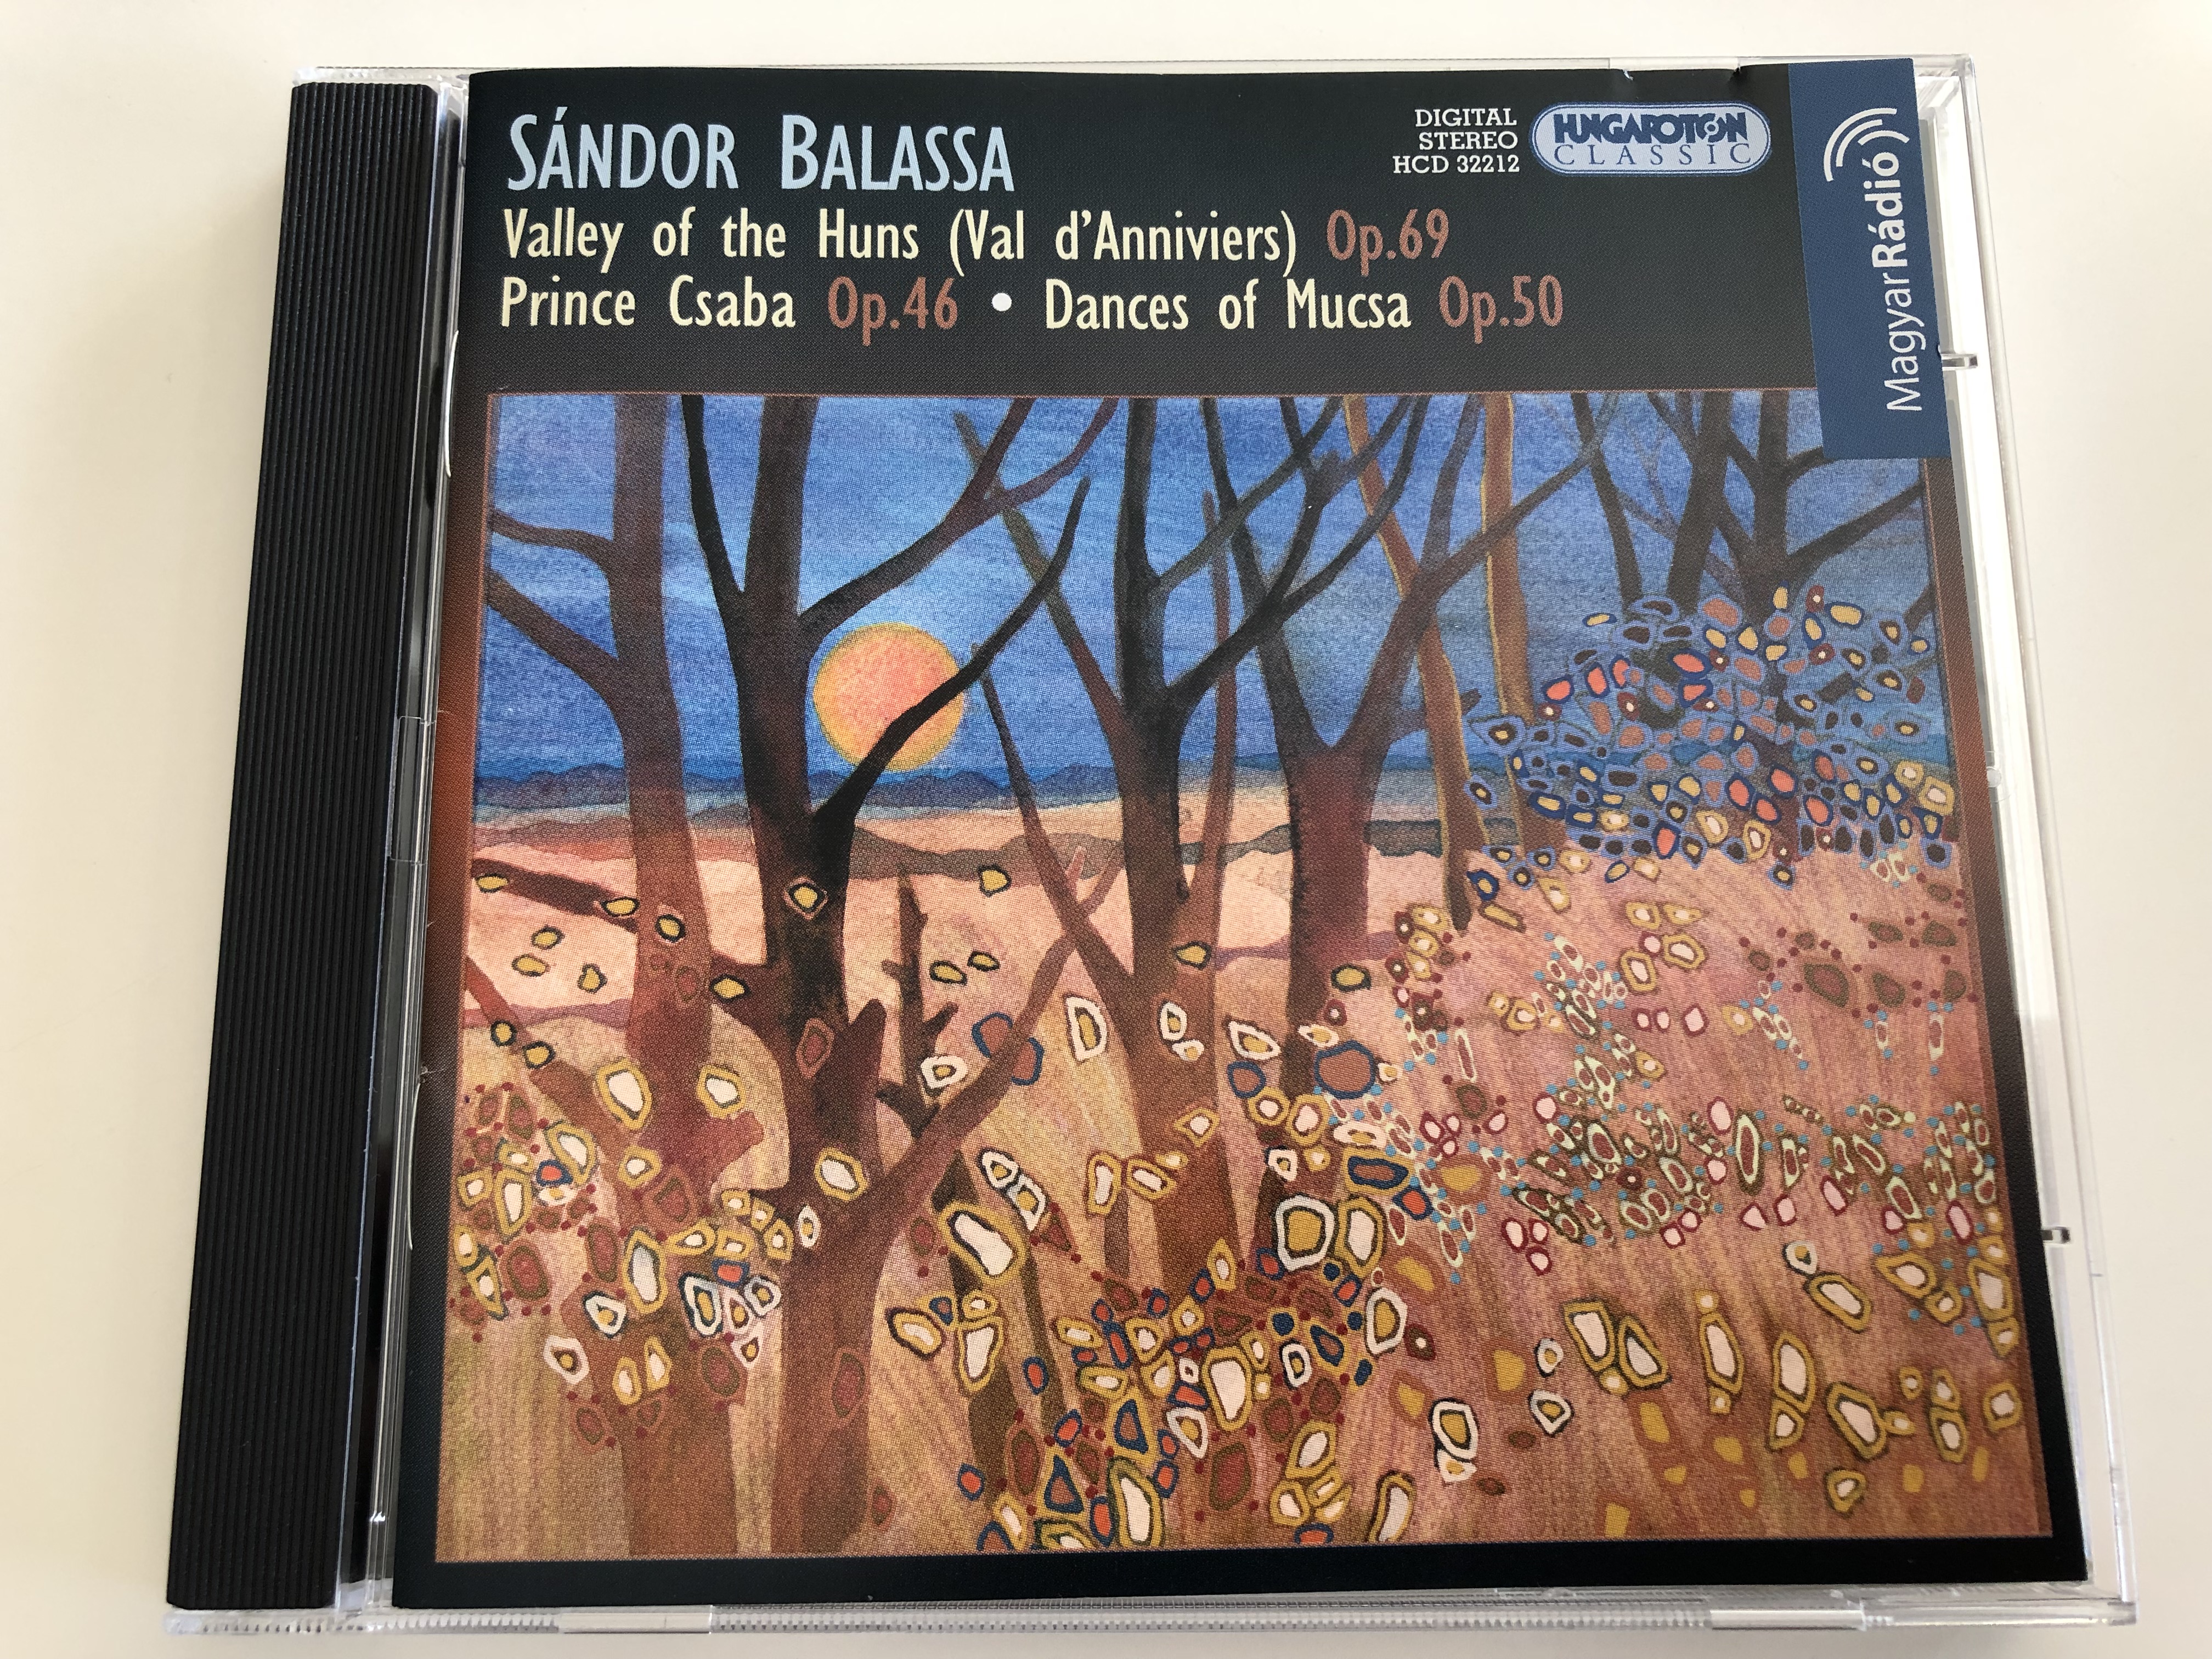 s-ndor-balassa-valley-of-the-huns-op.-69-prince-csaba-op.46-dances-of-mucsa-op.50-audio-cd-2004-hungaroton-classic-hcd-32212-1-.jpg